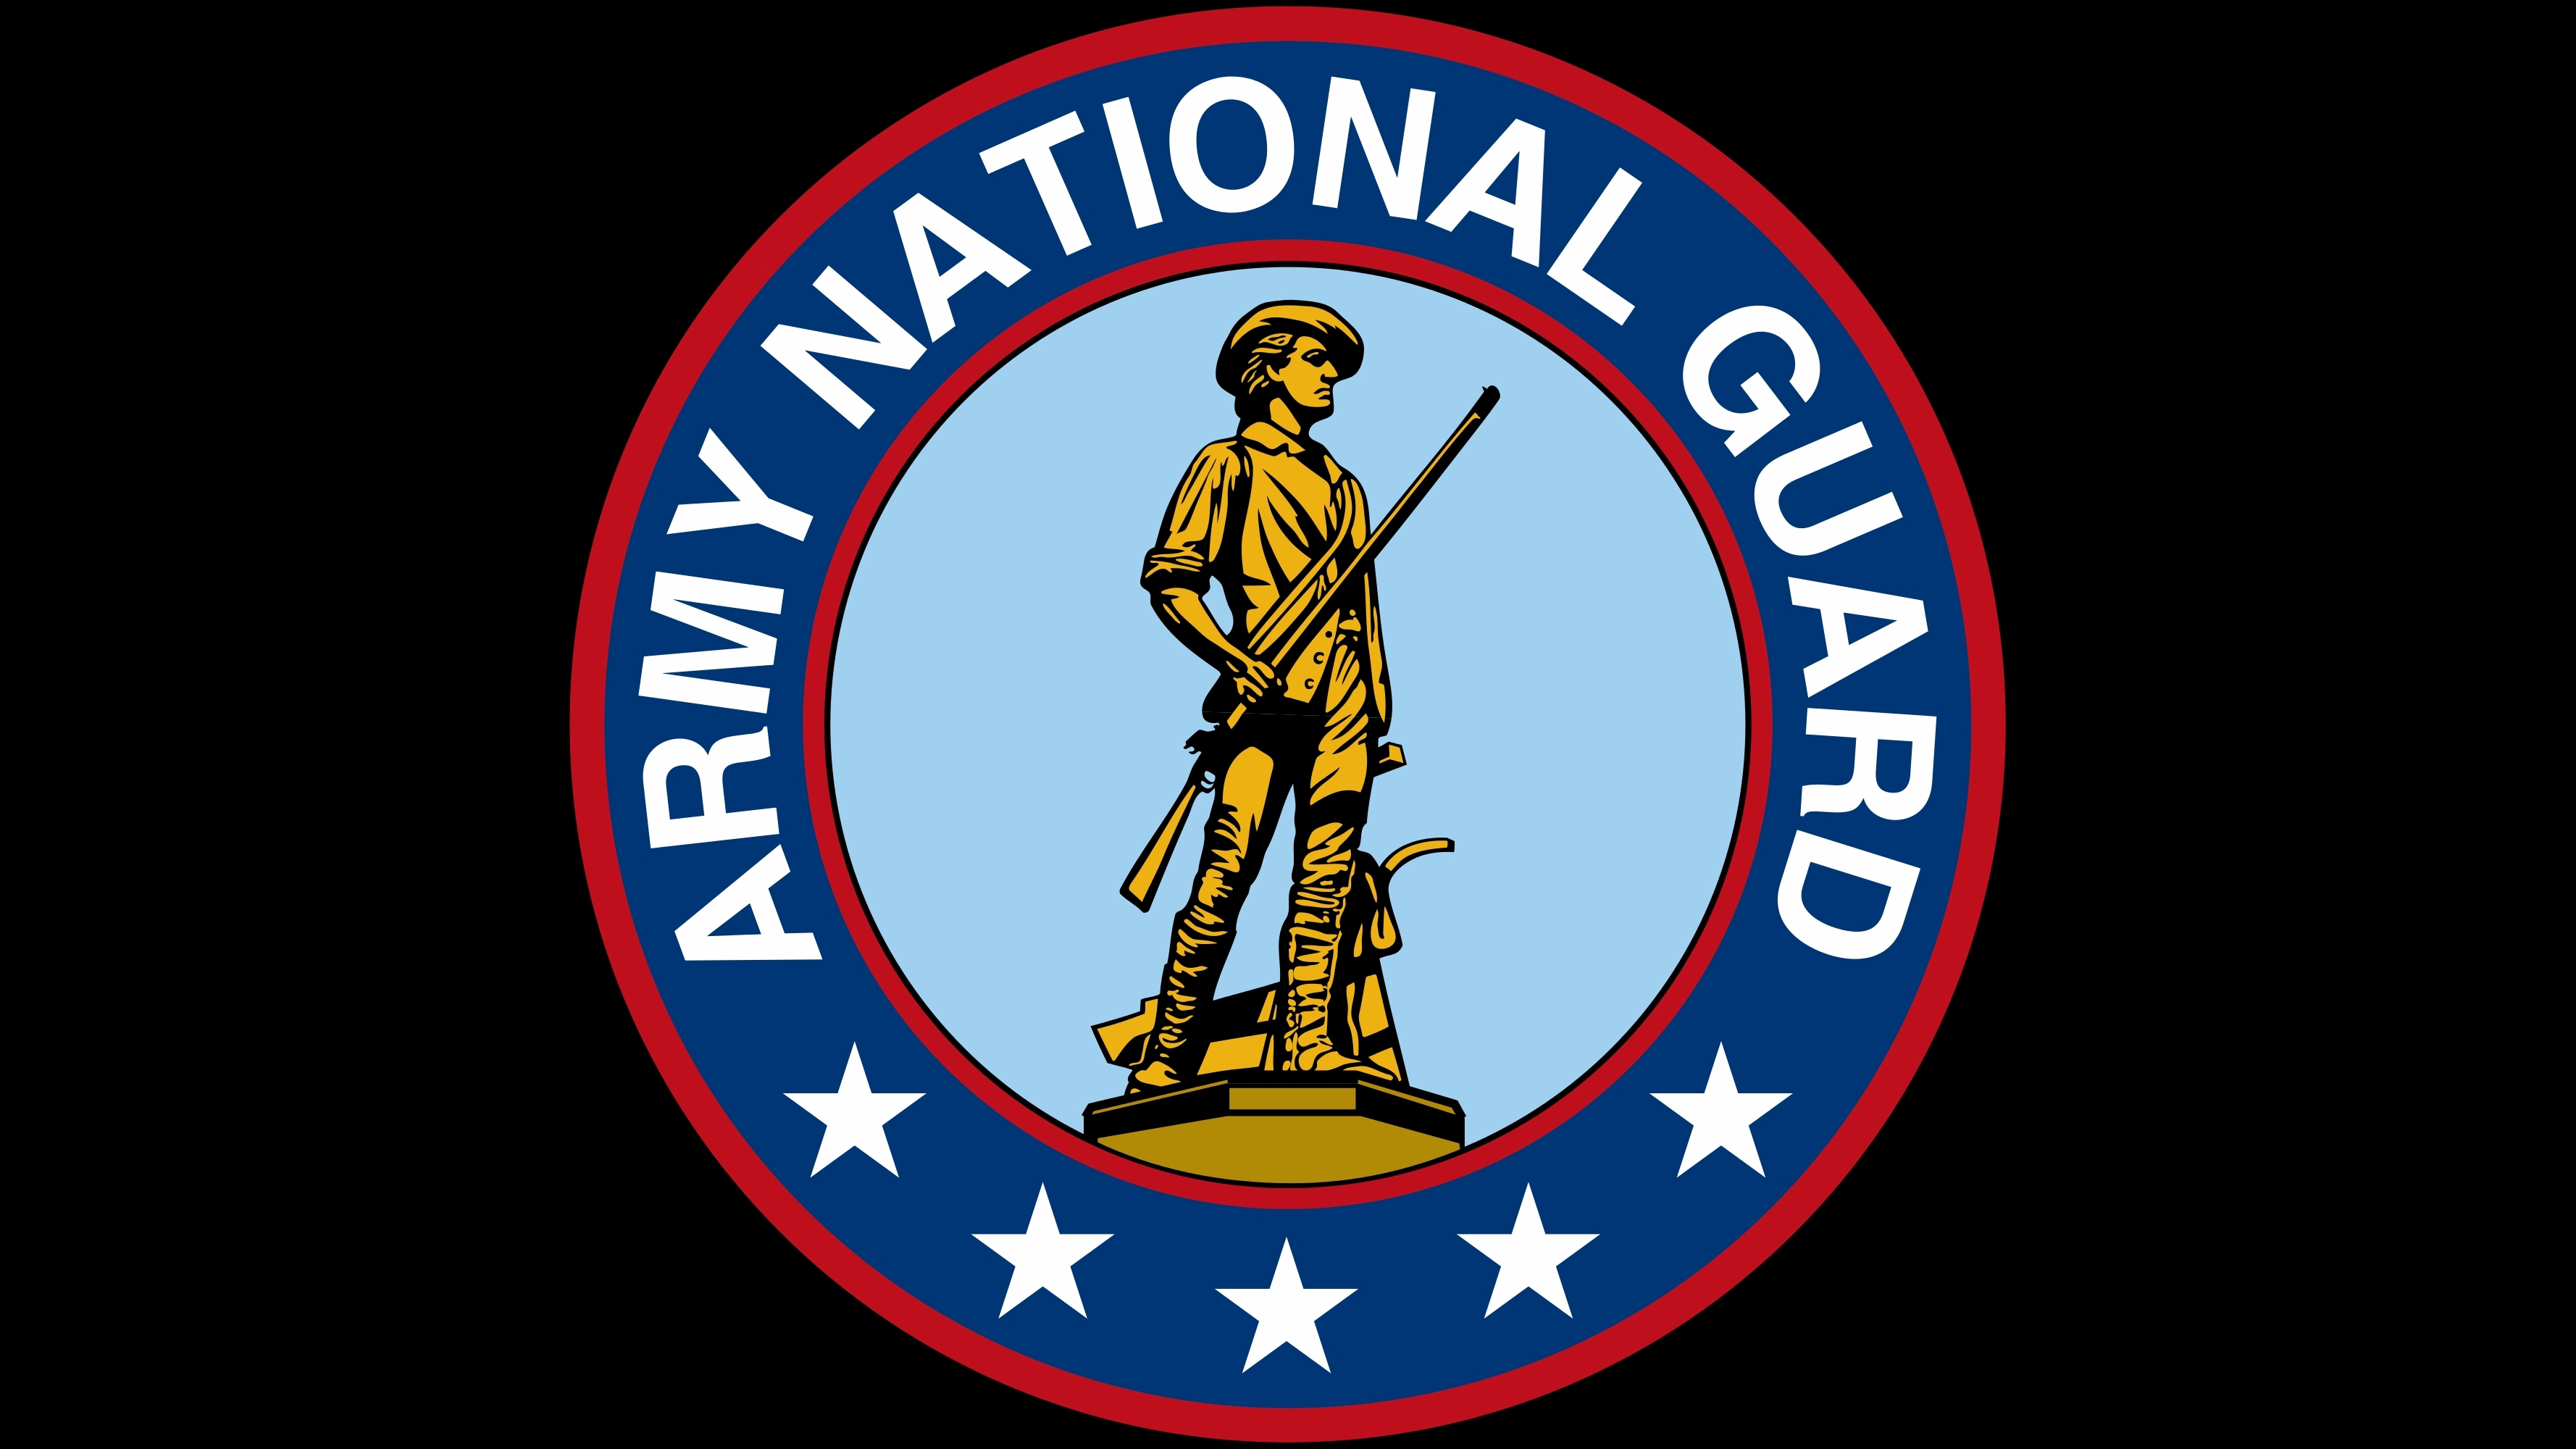 National Guard HD Wallpaper